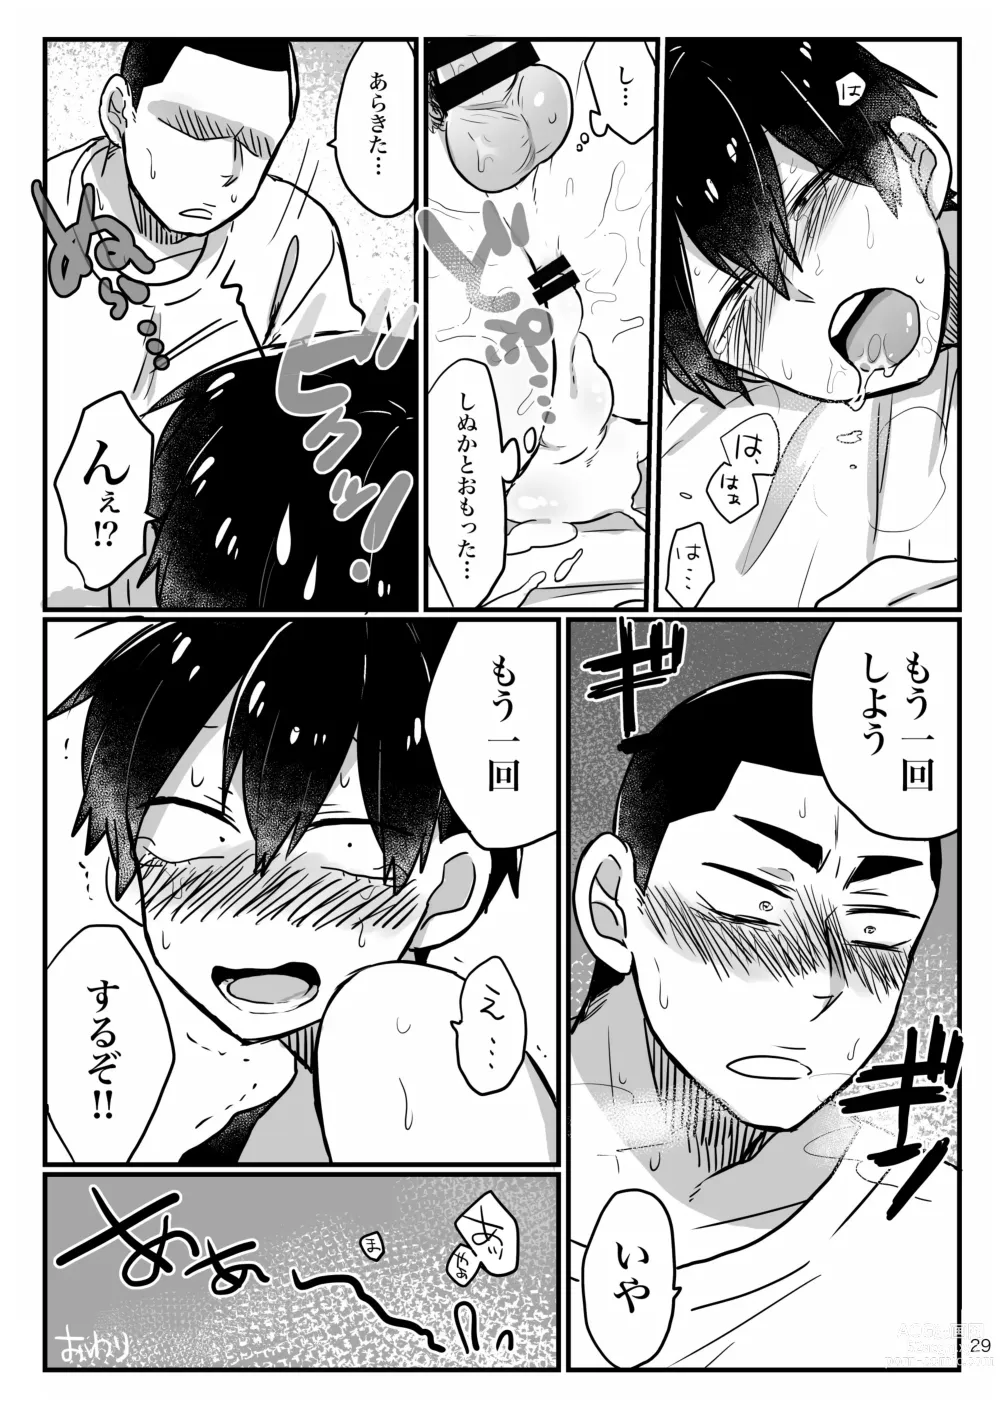 Page 27 of doujinshi Baby wo Namagoroshii!